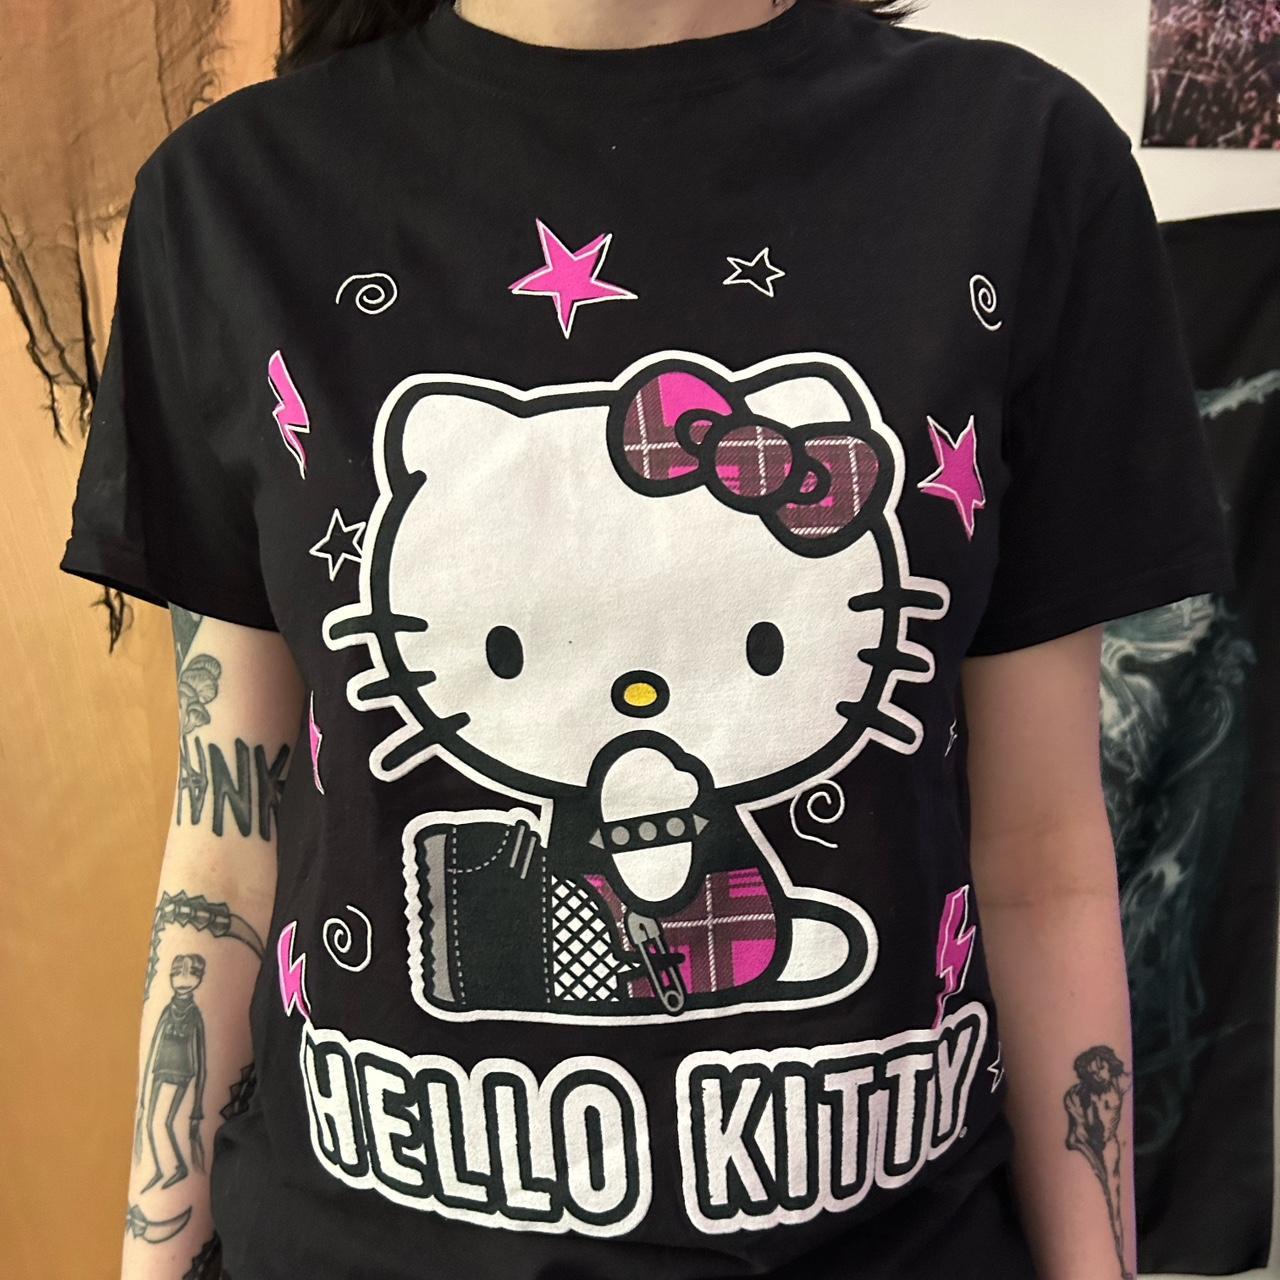 Hello Kitty Women's Black and Pink T-shirt | Depop